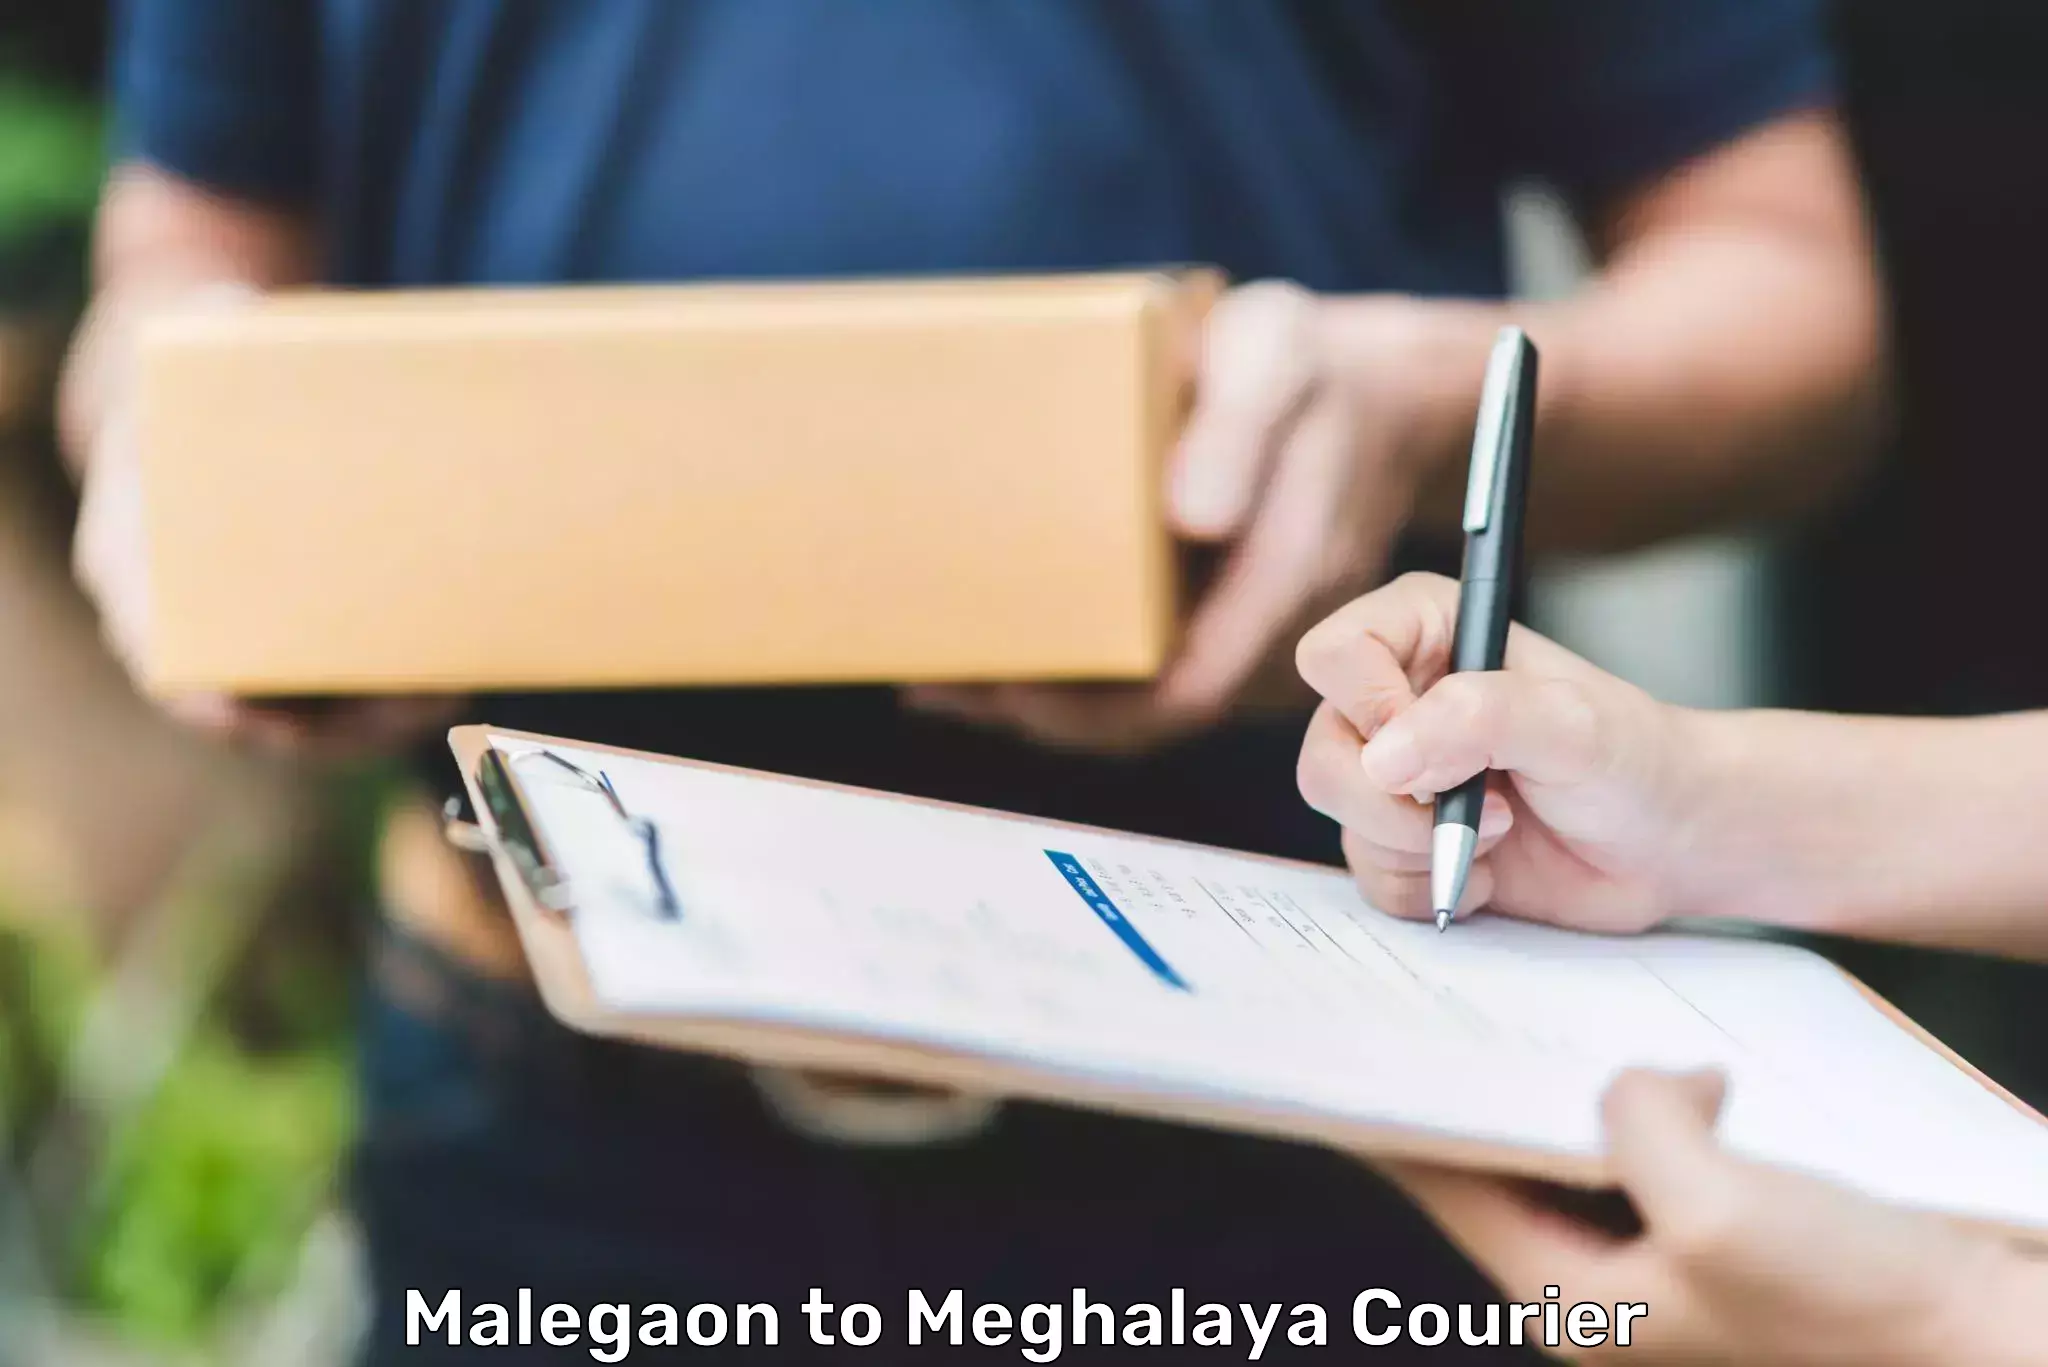 Efficient order fulfillment Malegaon to Shillong